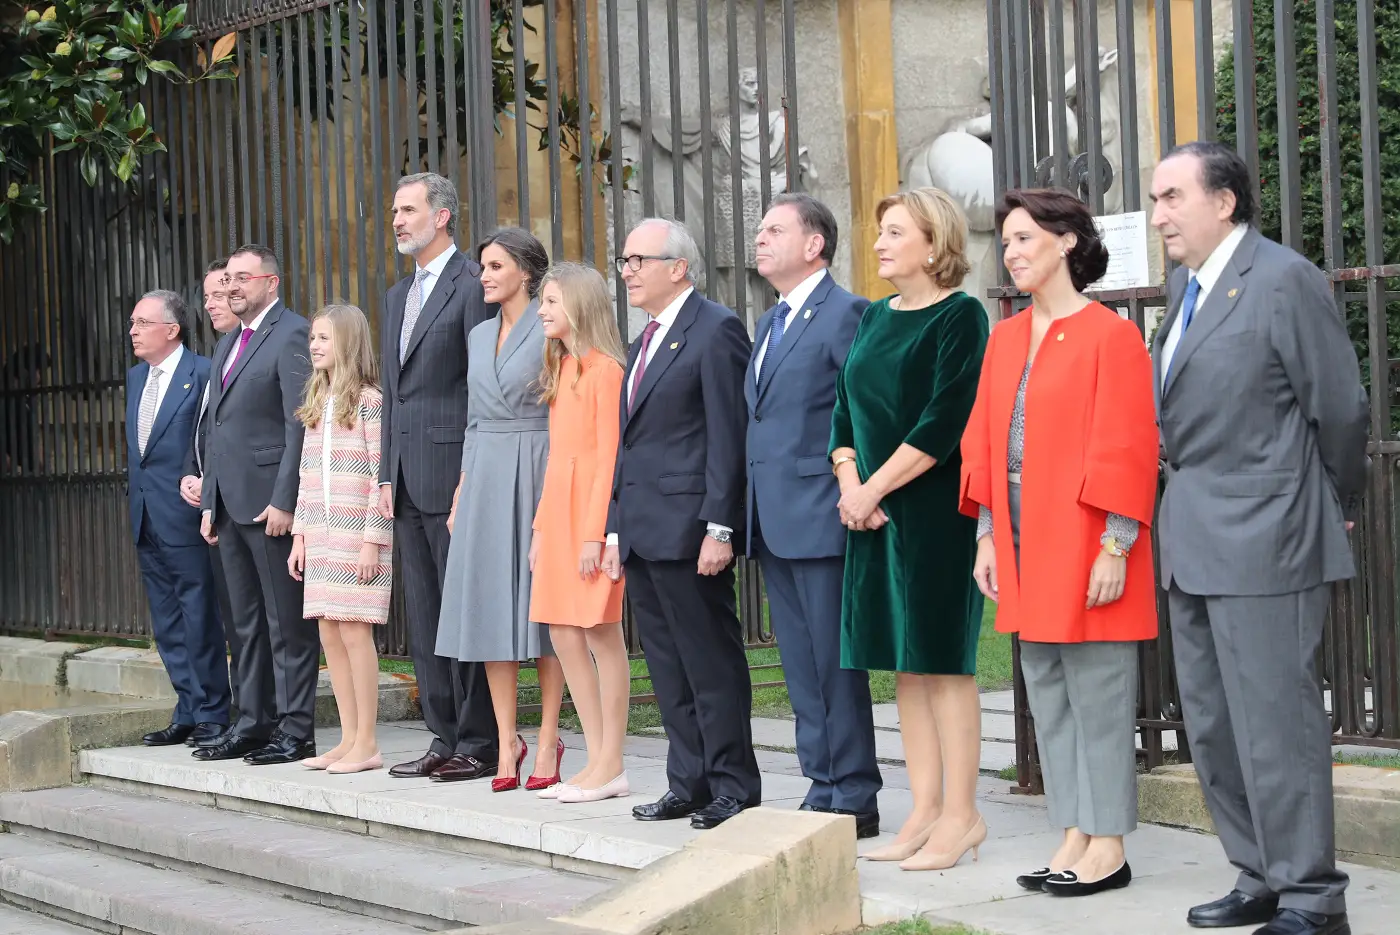 King Felipe and Queen Letizia brought Princess Leonore and Infanta Sofia to Princess of Asturias Awards